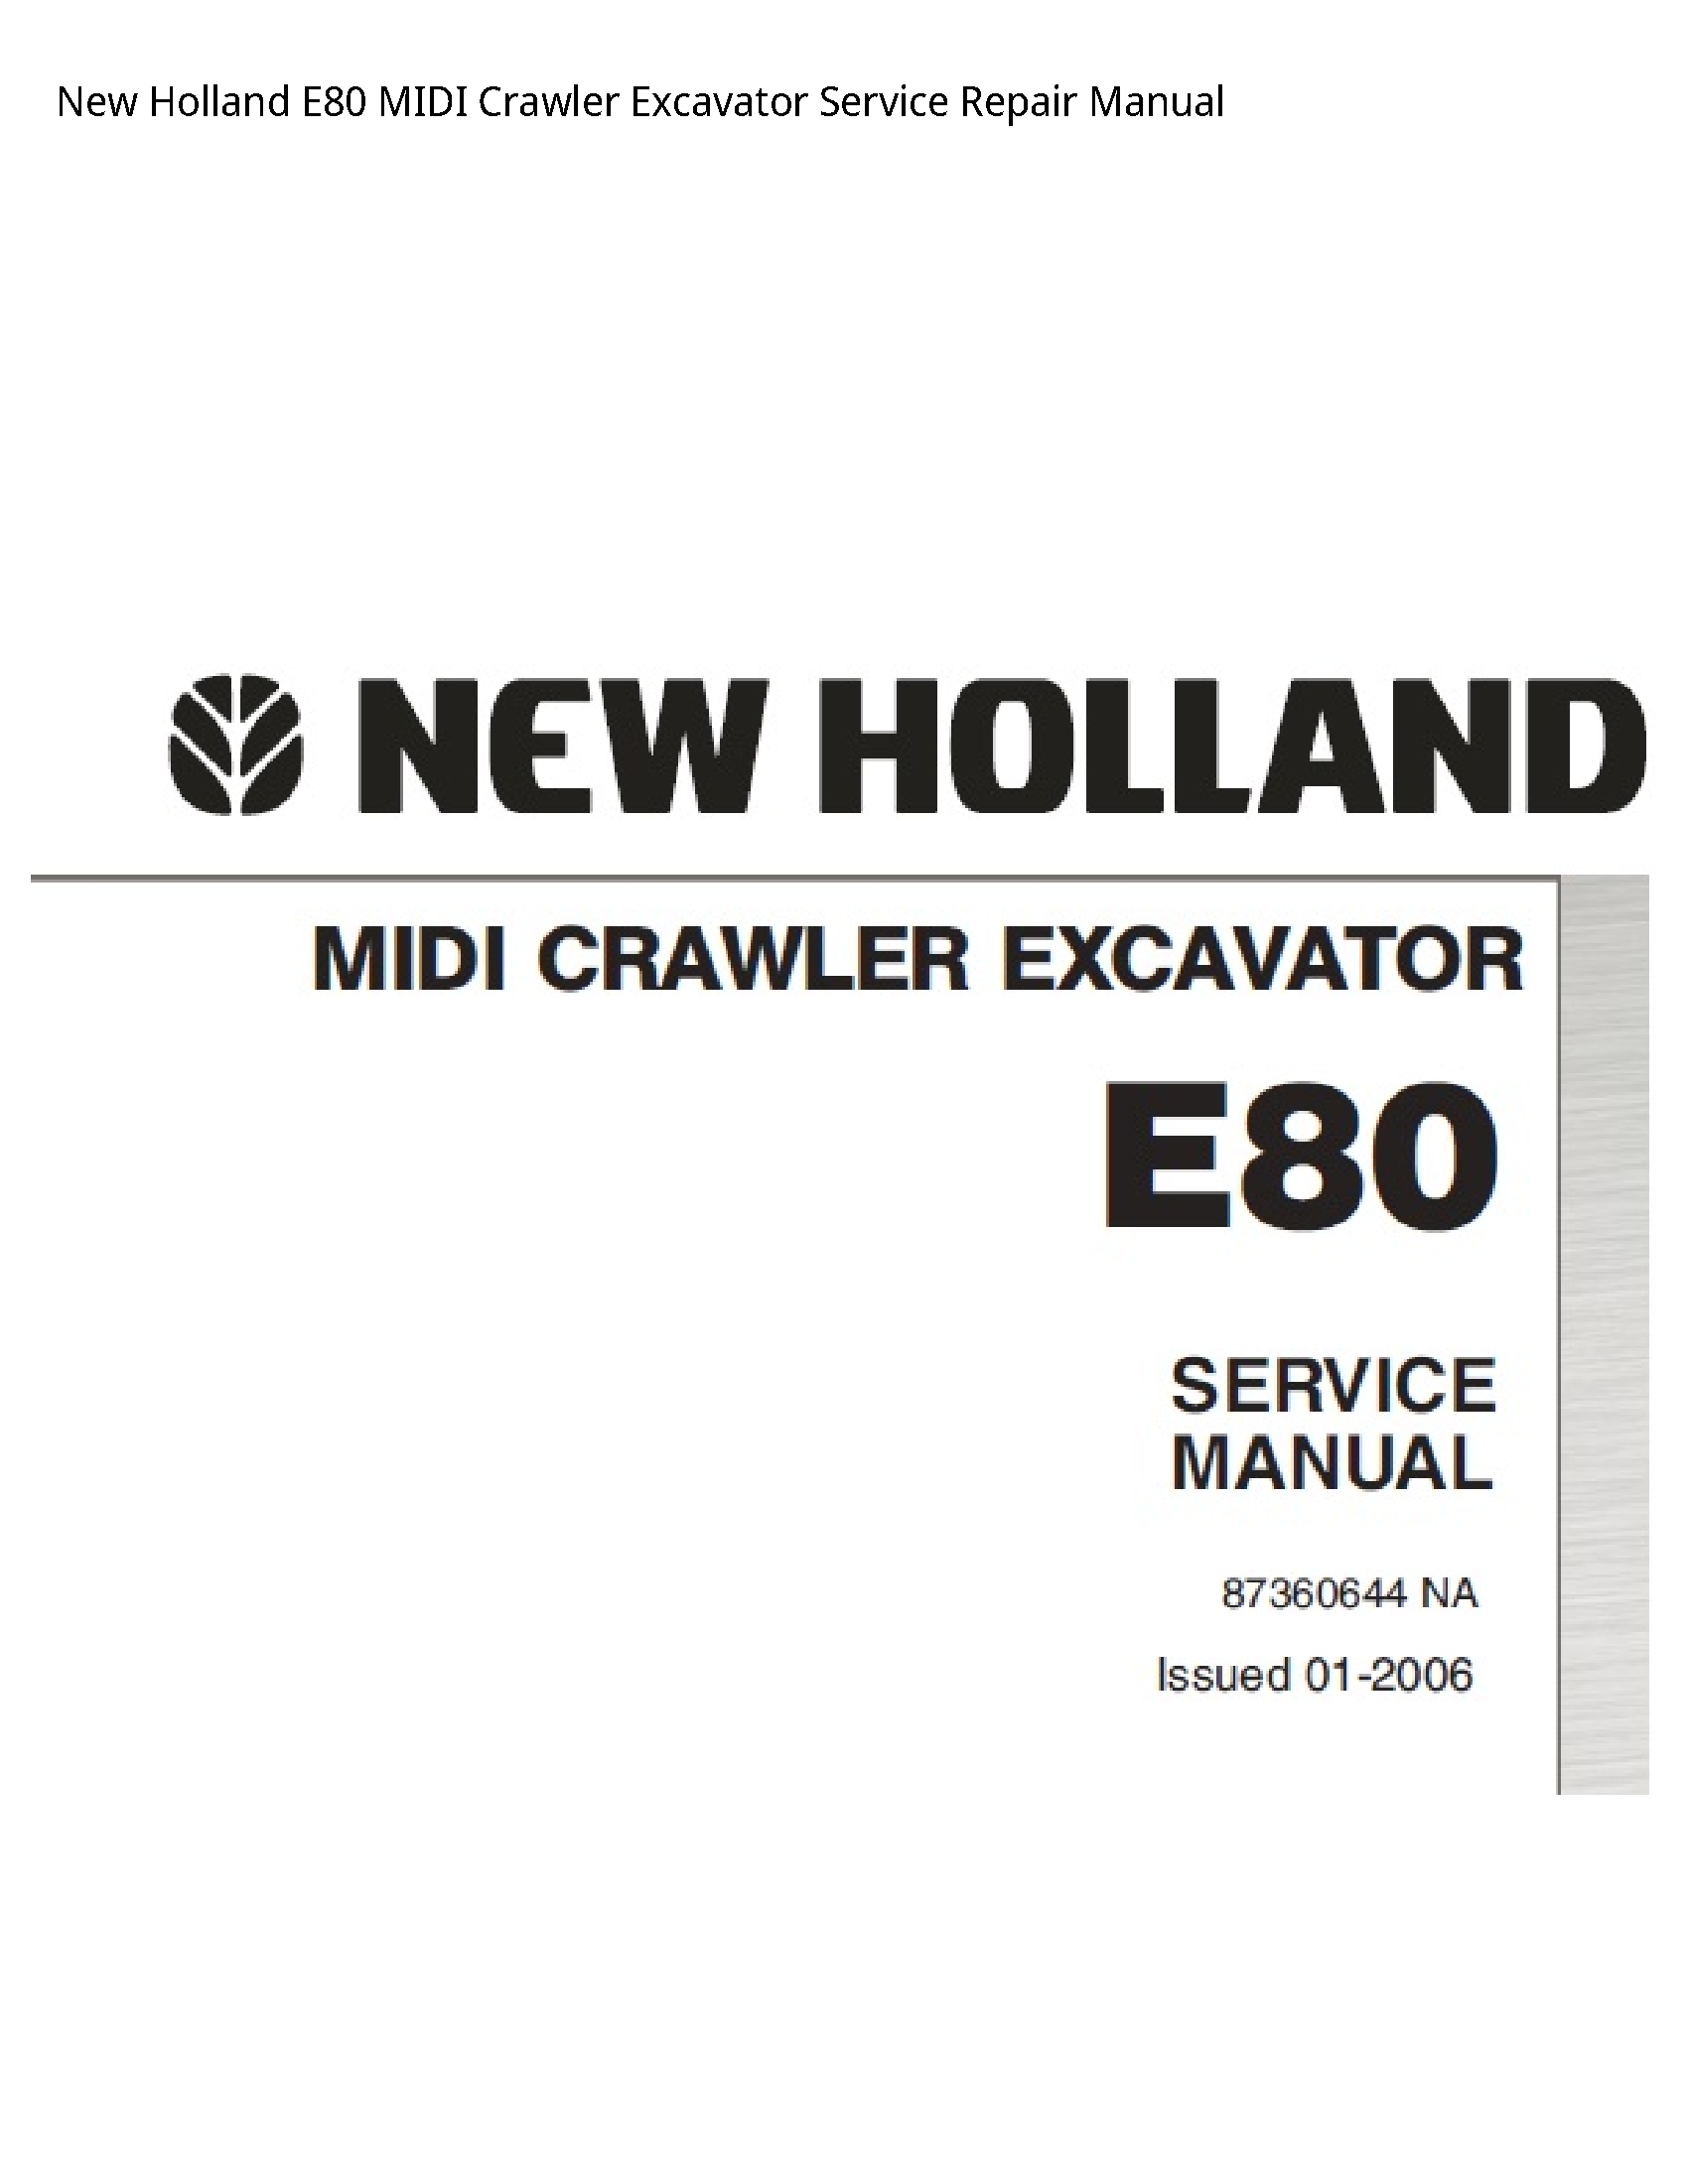 New Holland E80 MIDI Crawler Excavator manual